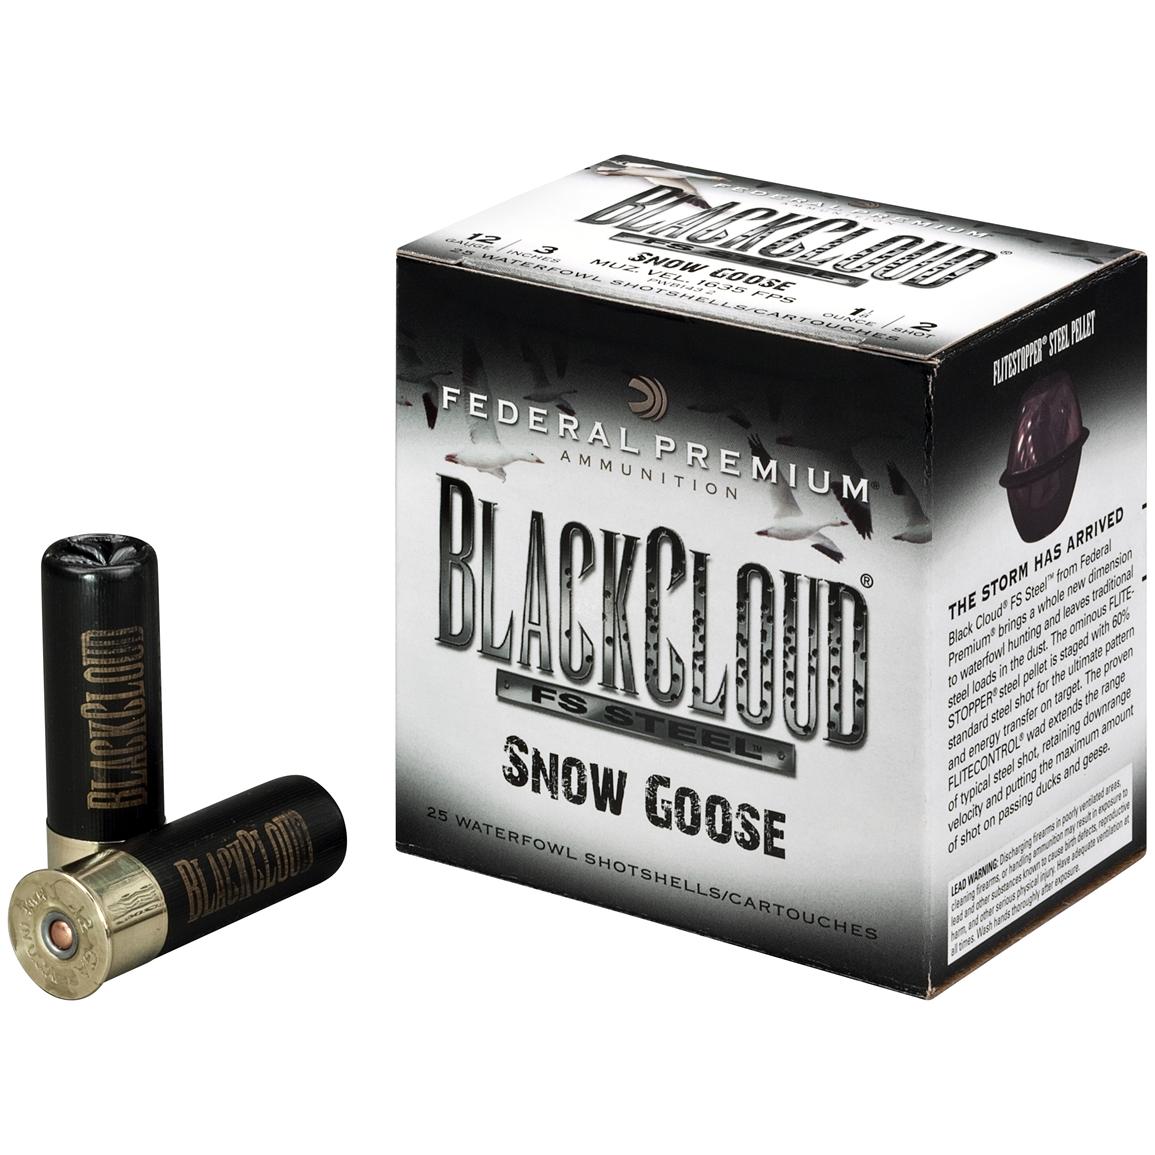 25-rounds-federal-premium-black-cloud-snow-goose-shot-shells-228720